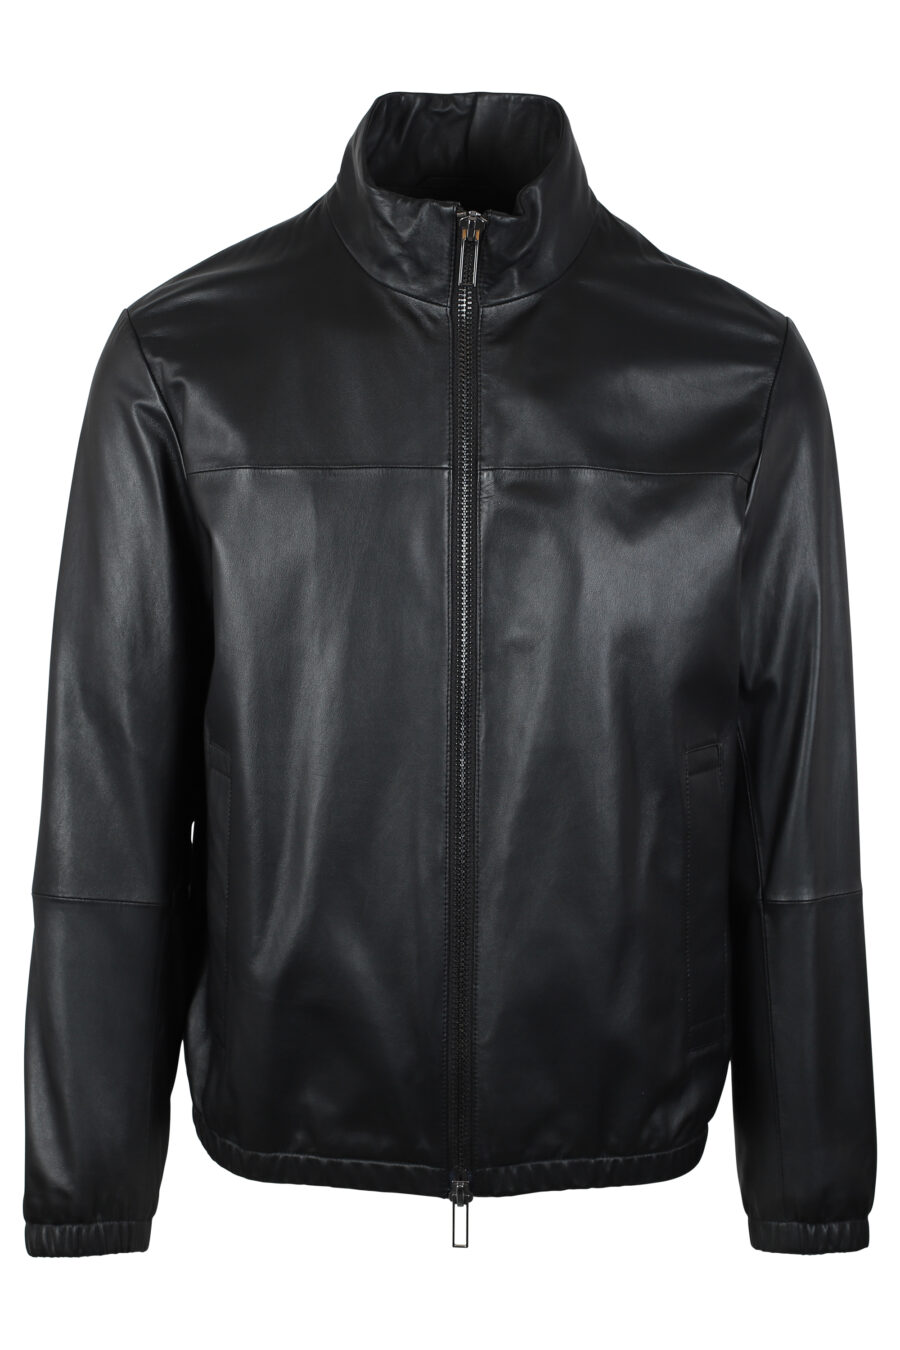 Casaco de couro preto com mini-logotipo - IMG 4658